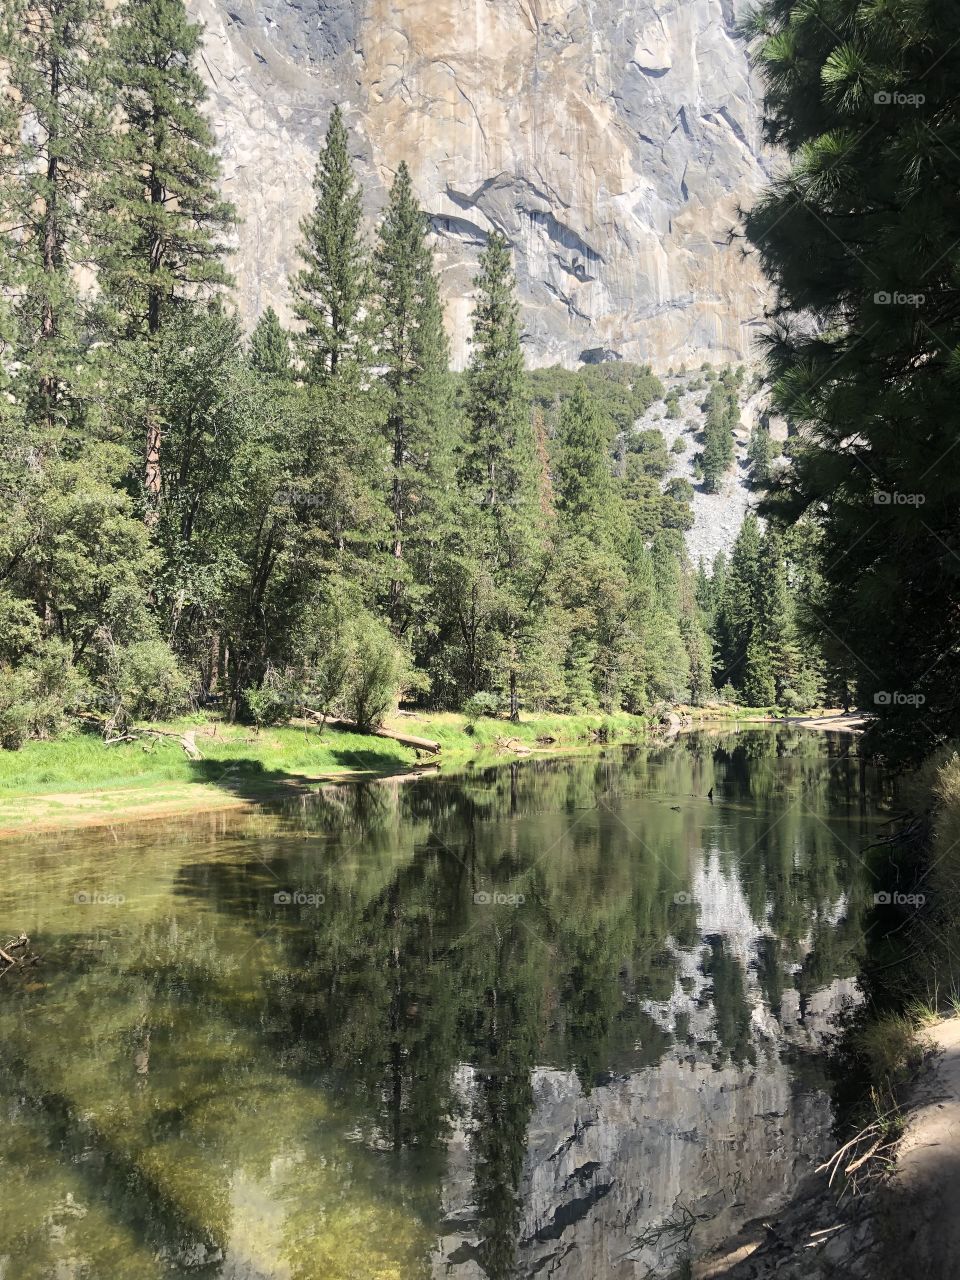 Merced river in Yosemite national park 